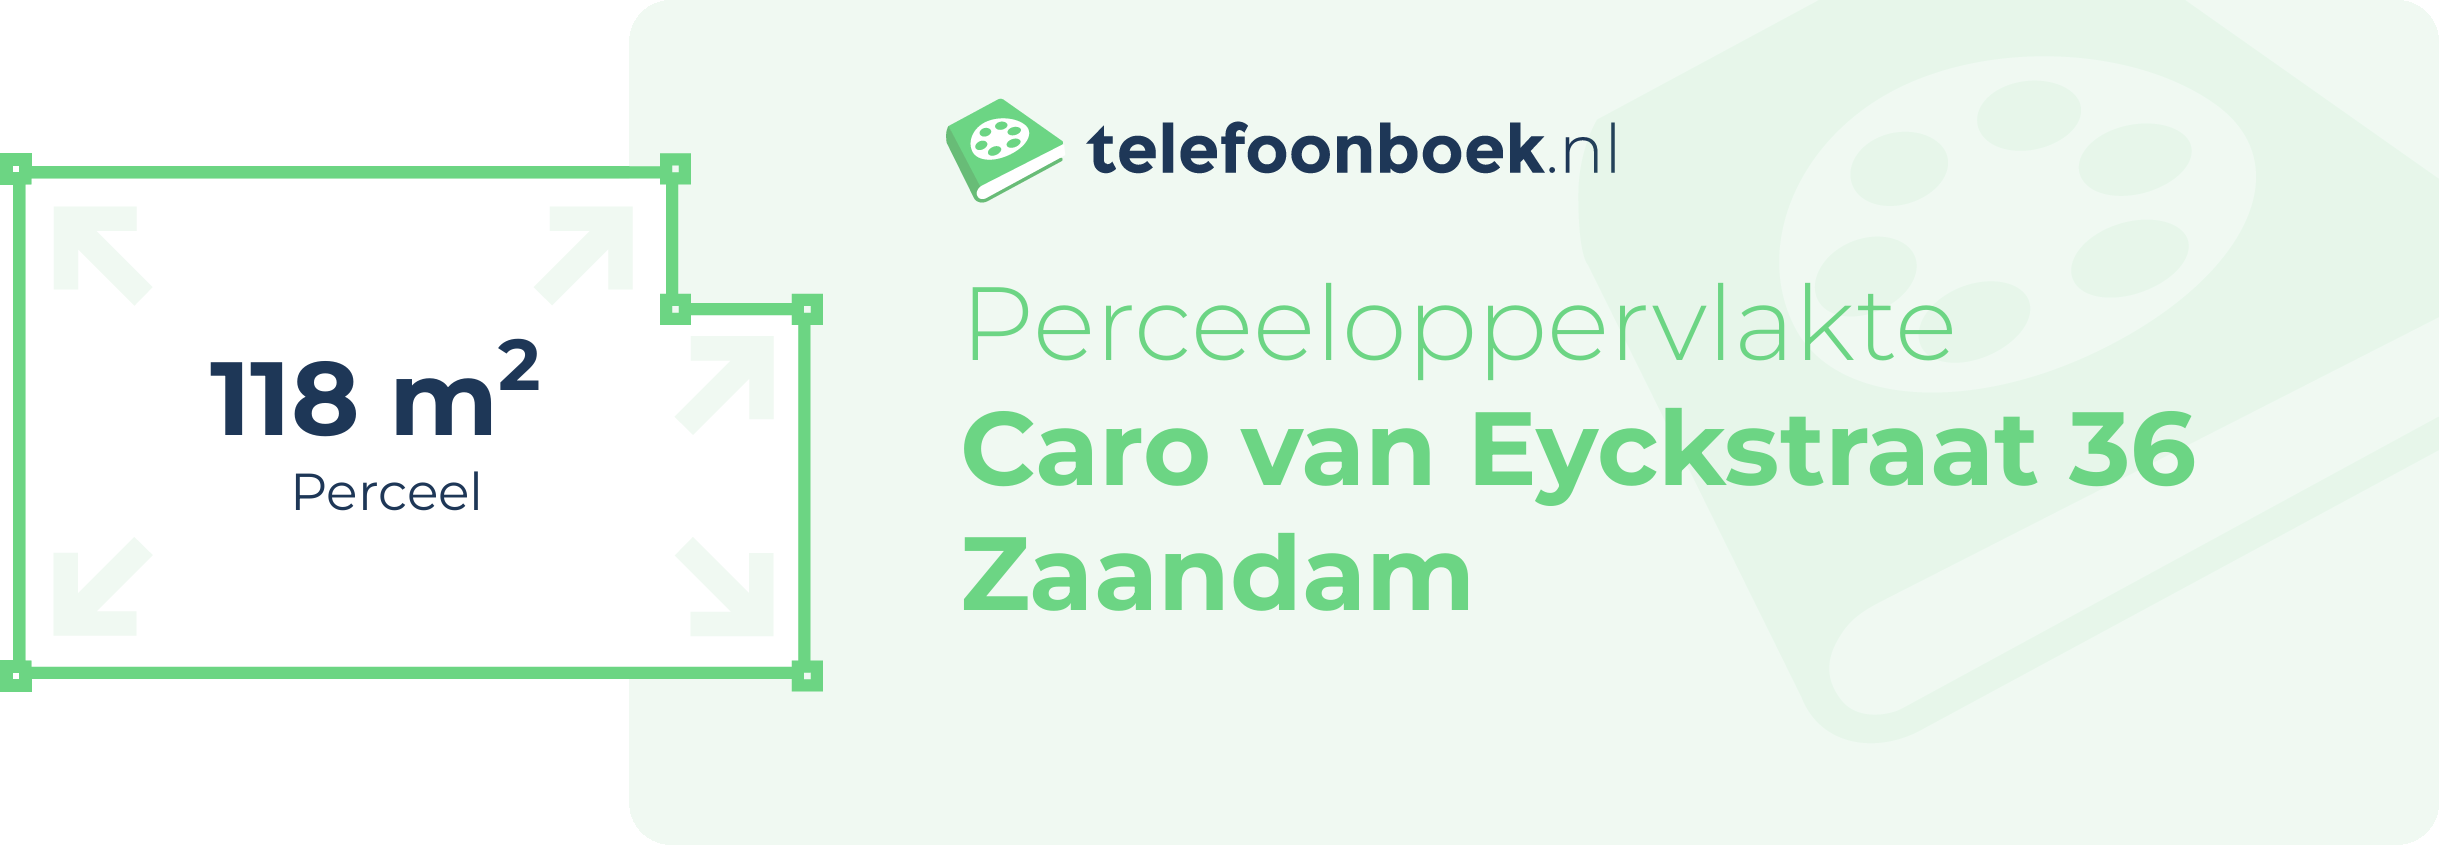 Perceeloppervlakte Caro Van Eyckstraat 36 Zaandam